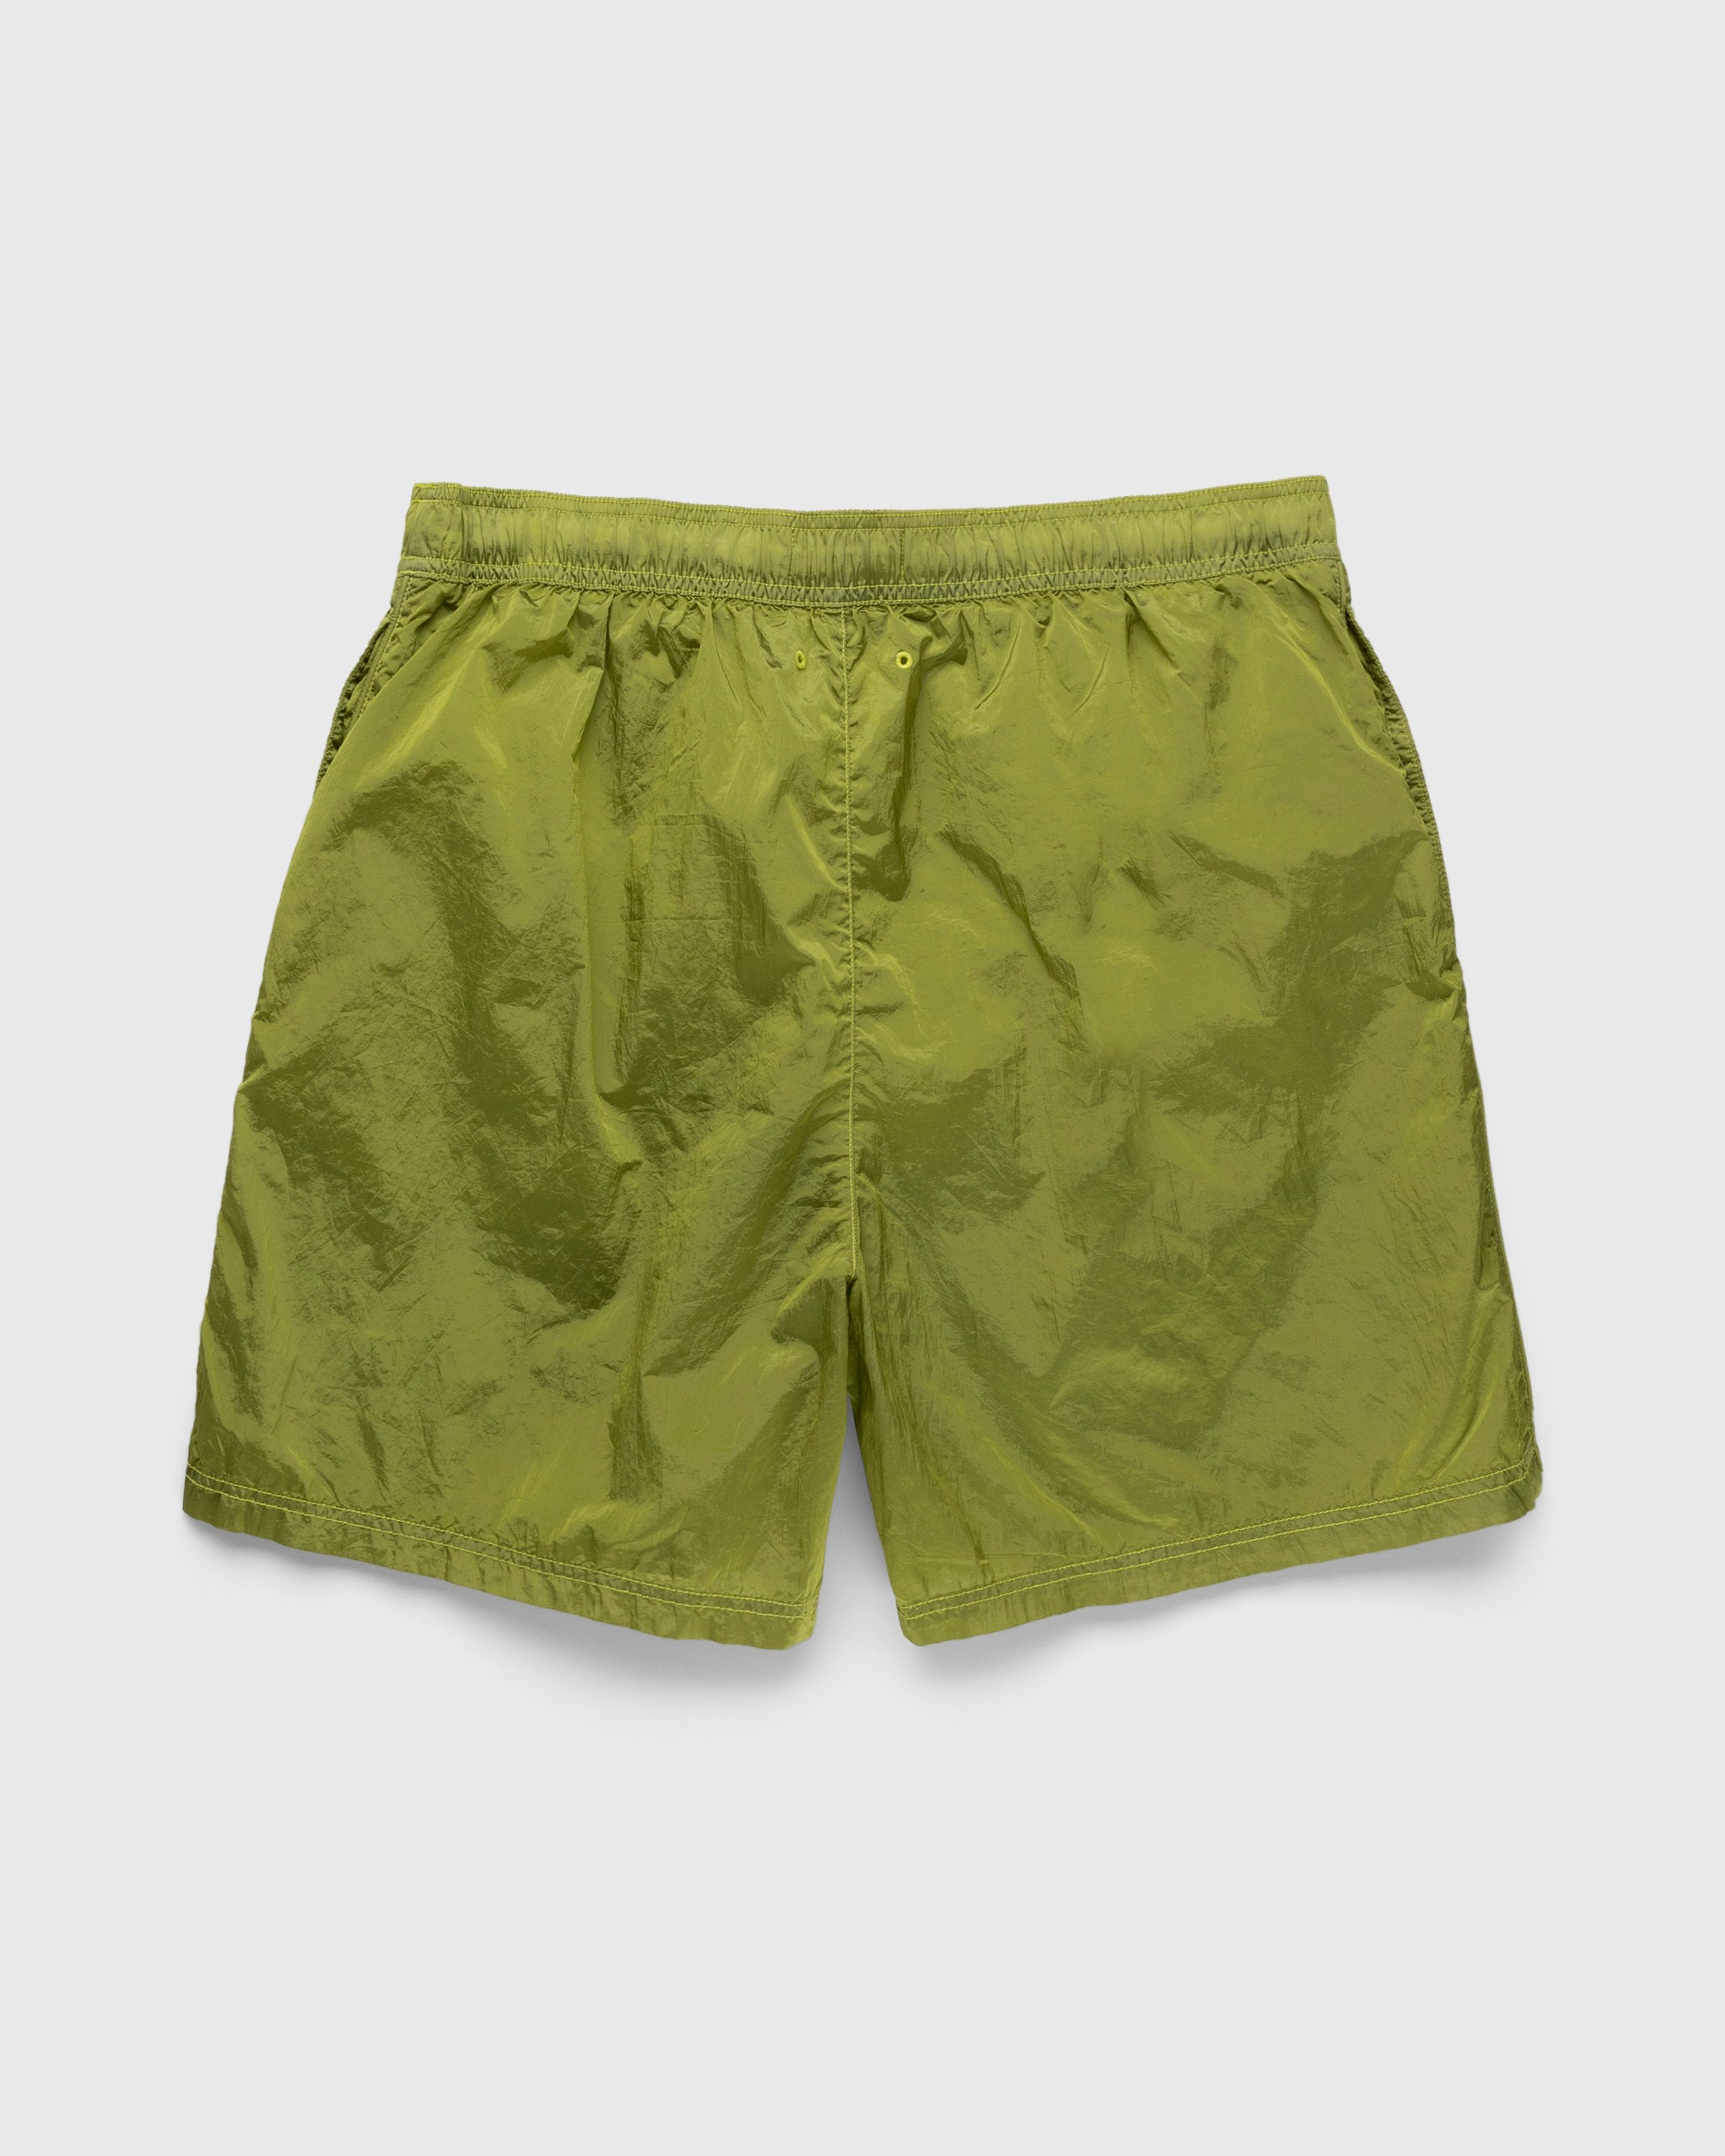 Stone Island - B0243 Nylon Metal Swim Shorts Lemon - Clothing - Yellow - Image 2